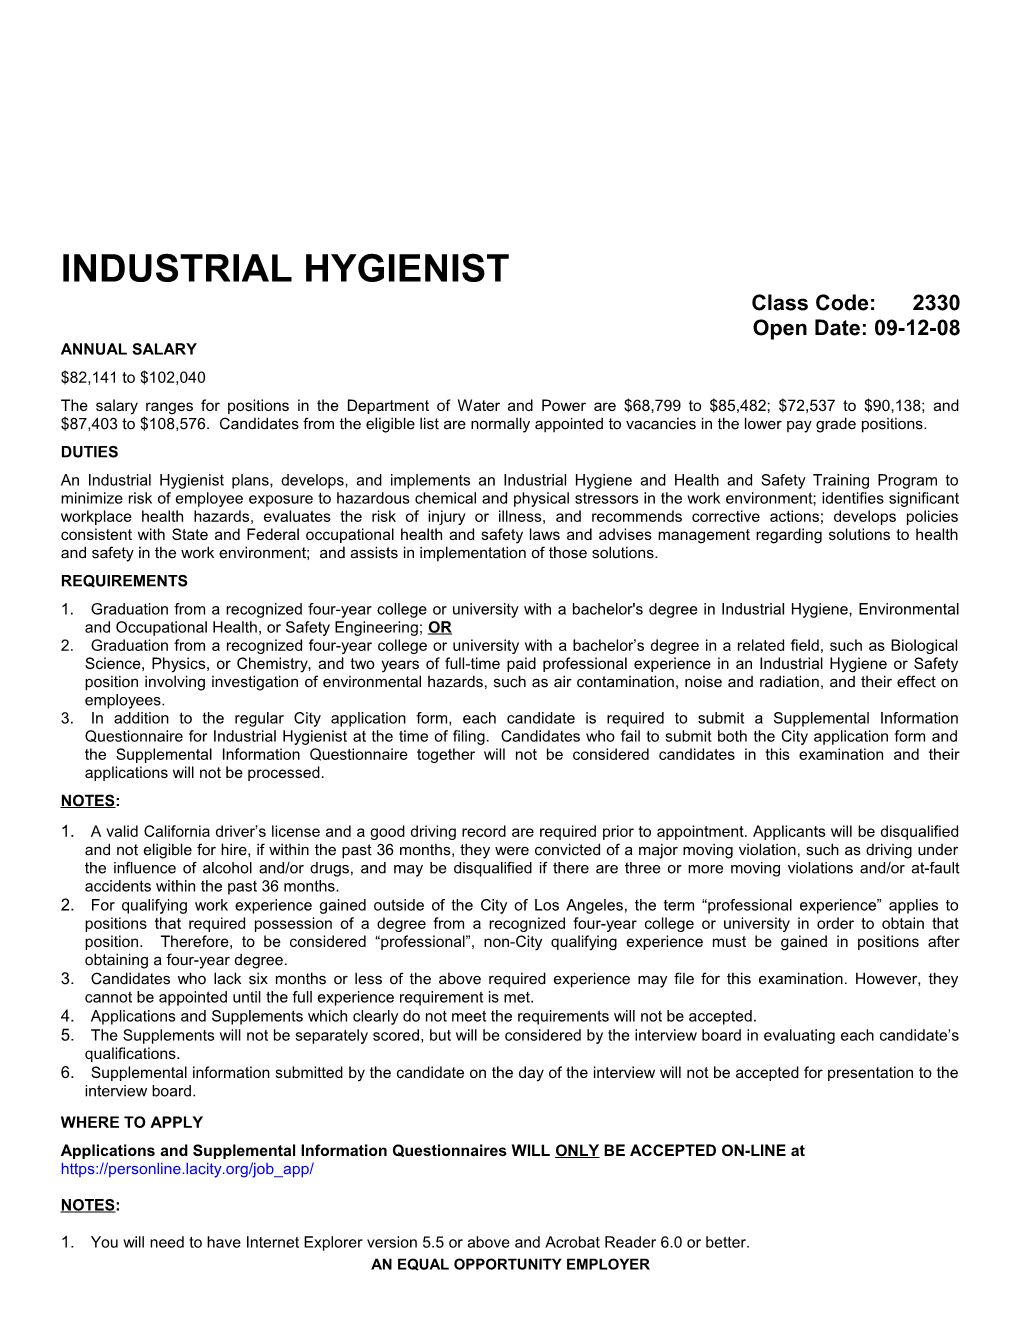 Industrial Hygienist